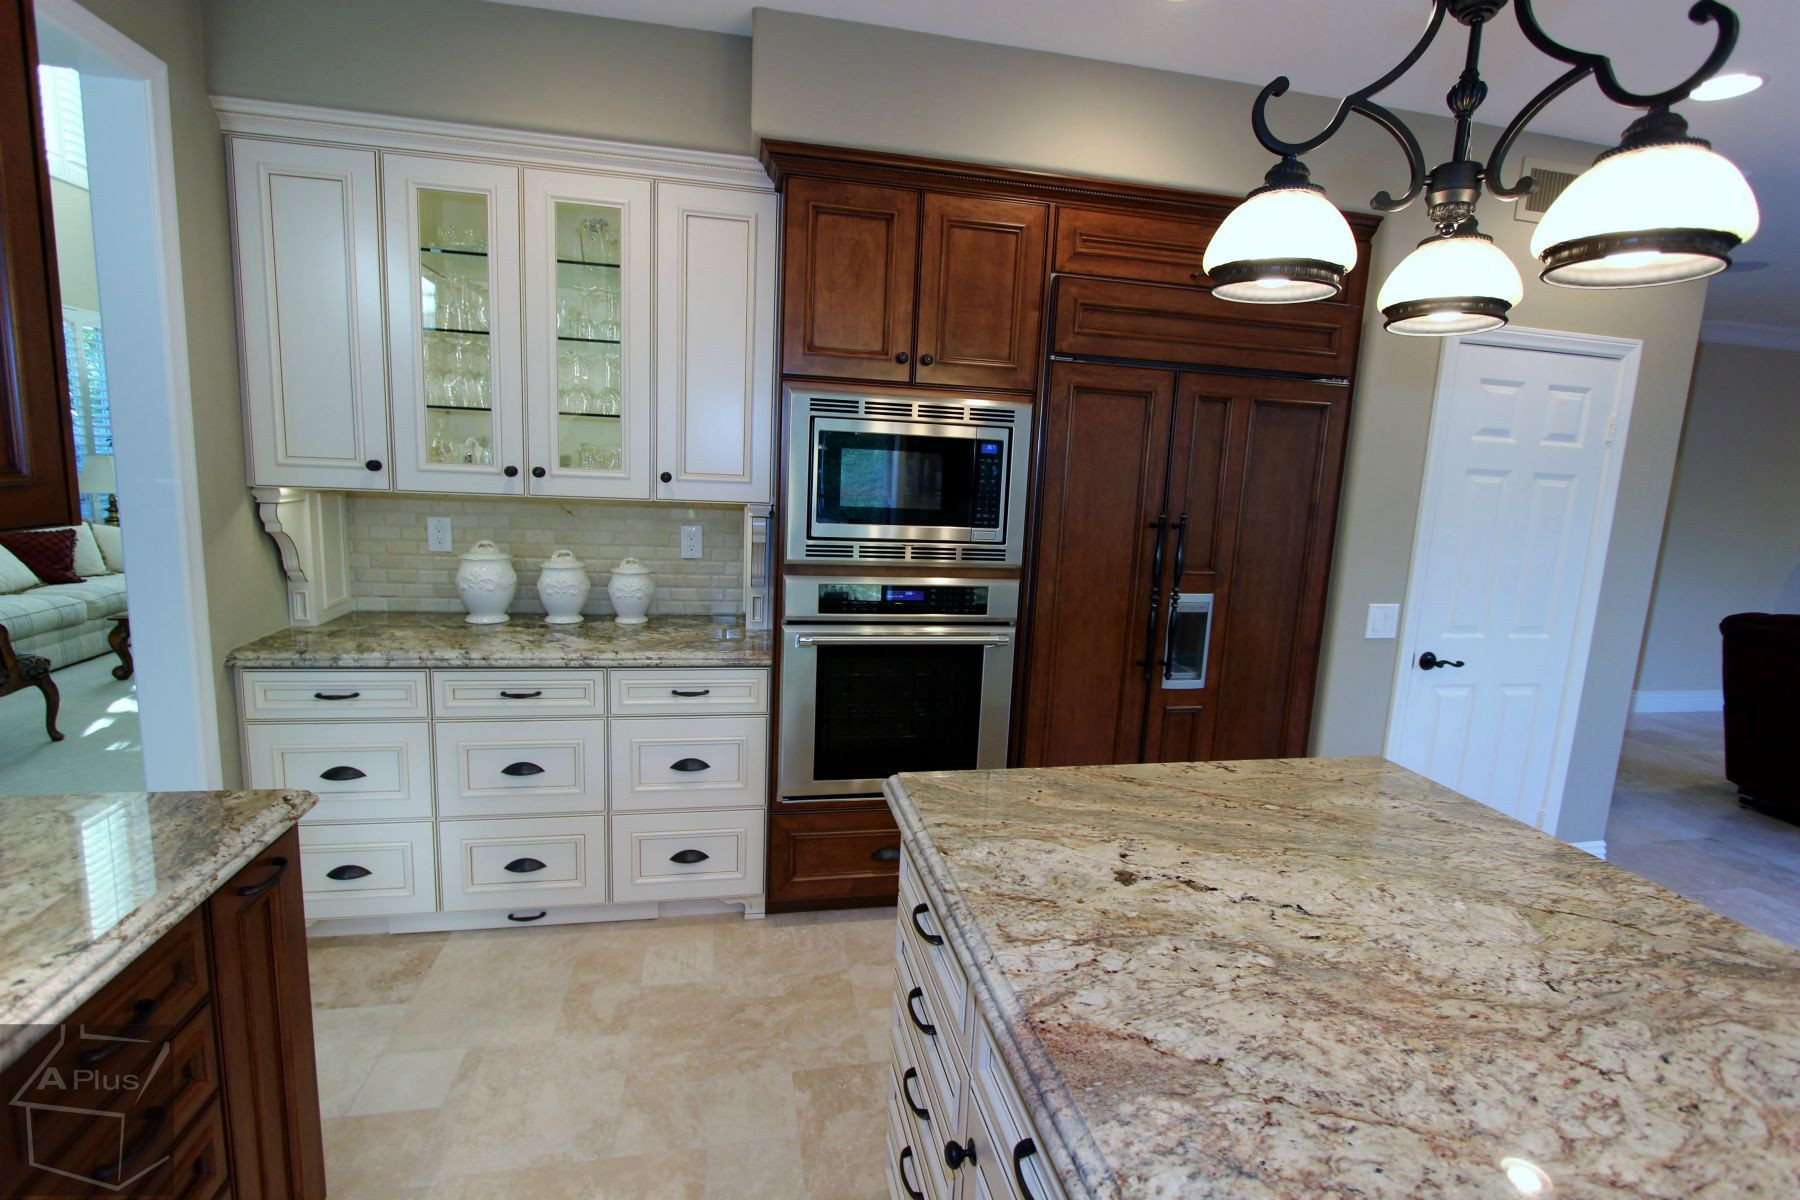 Kitchen Remodel Orange County
 aplus interior design & remodeling